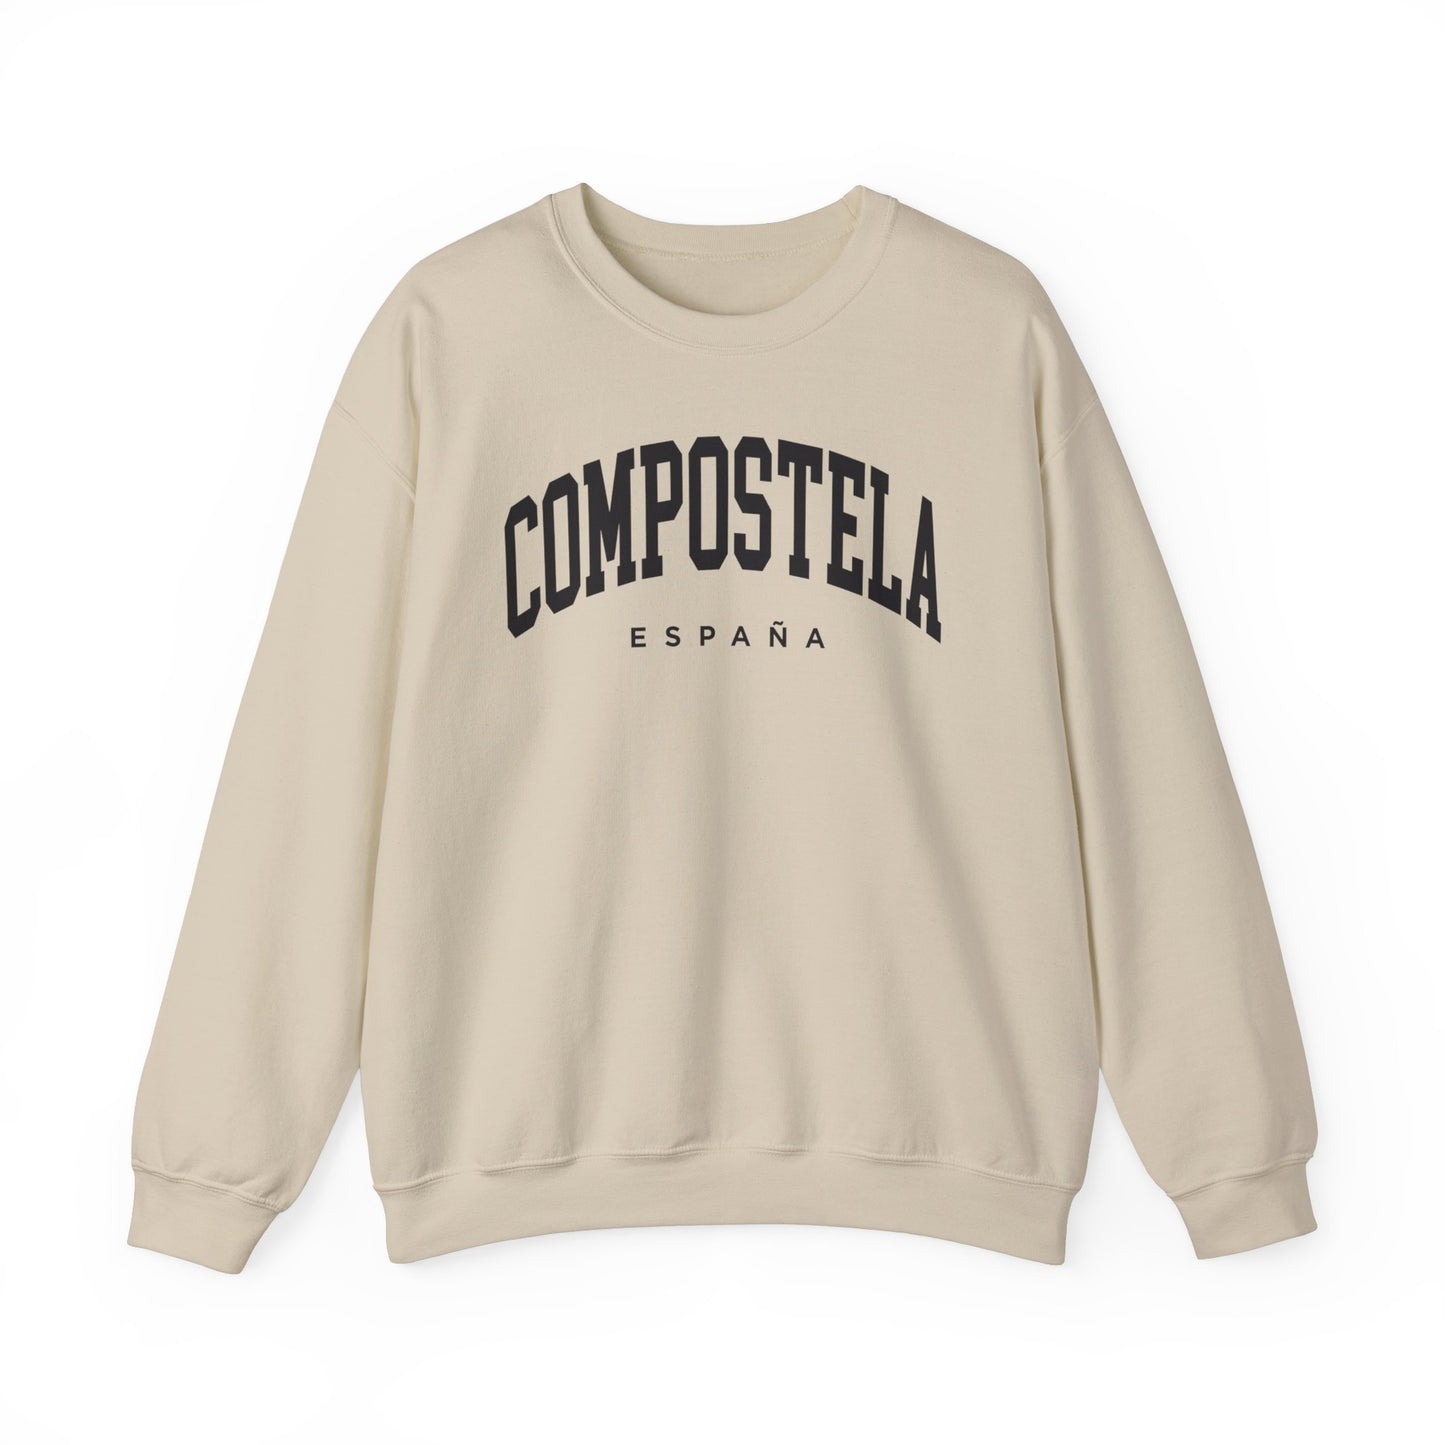 Compostela Spain Sweatshirt